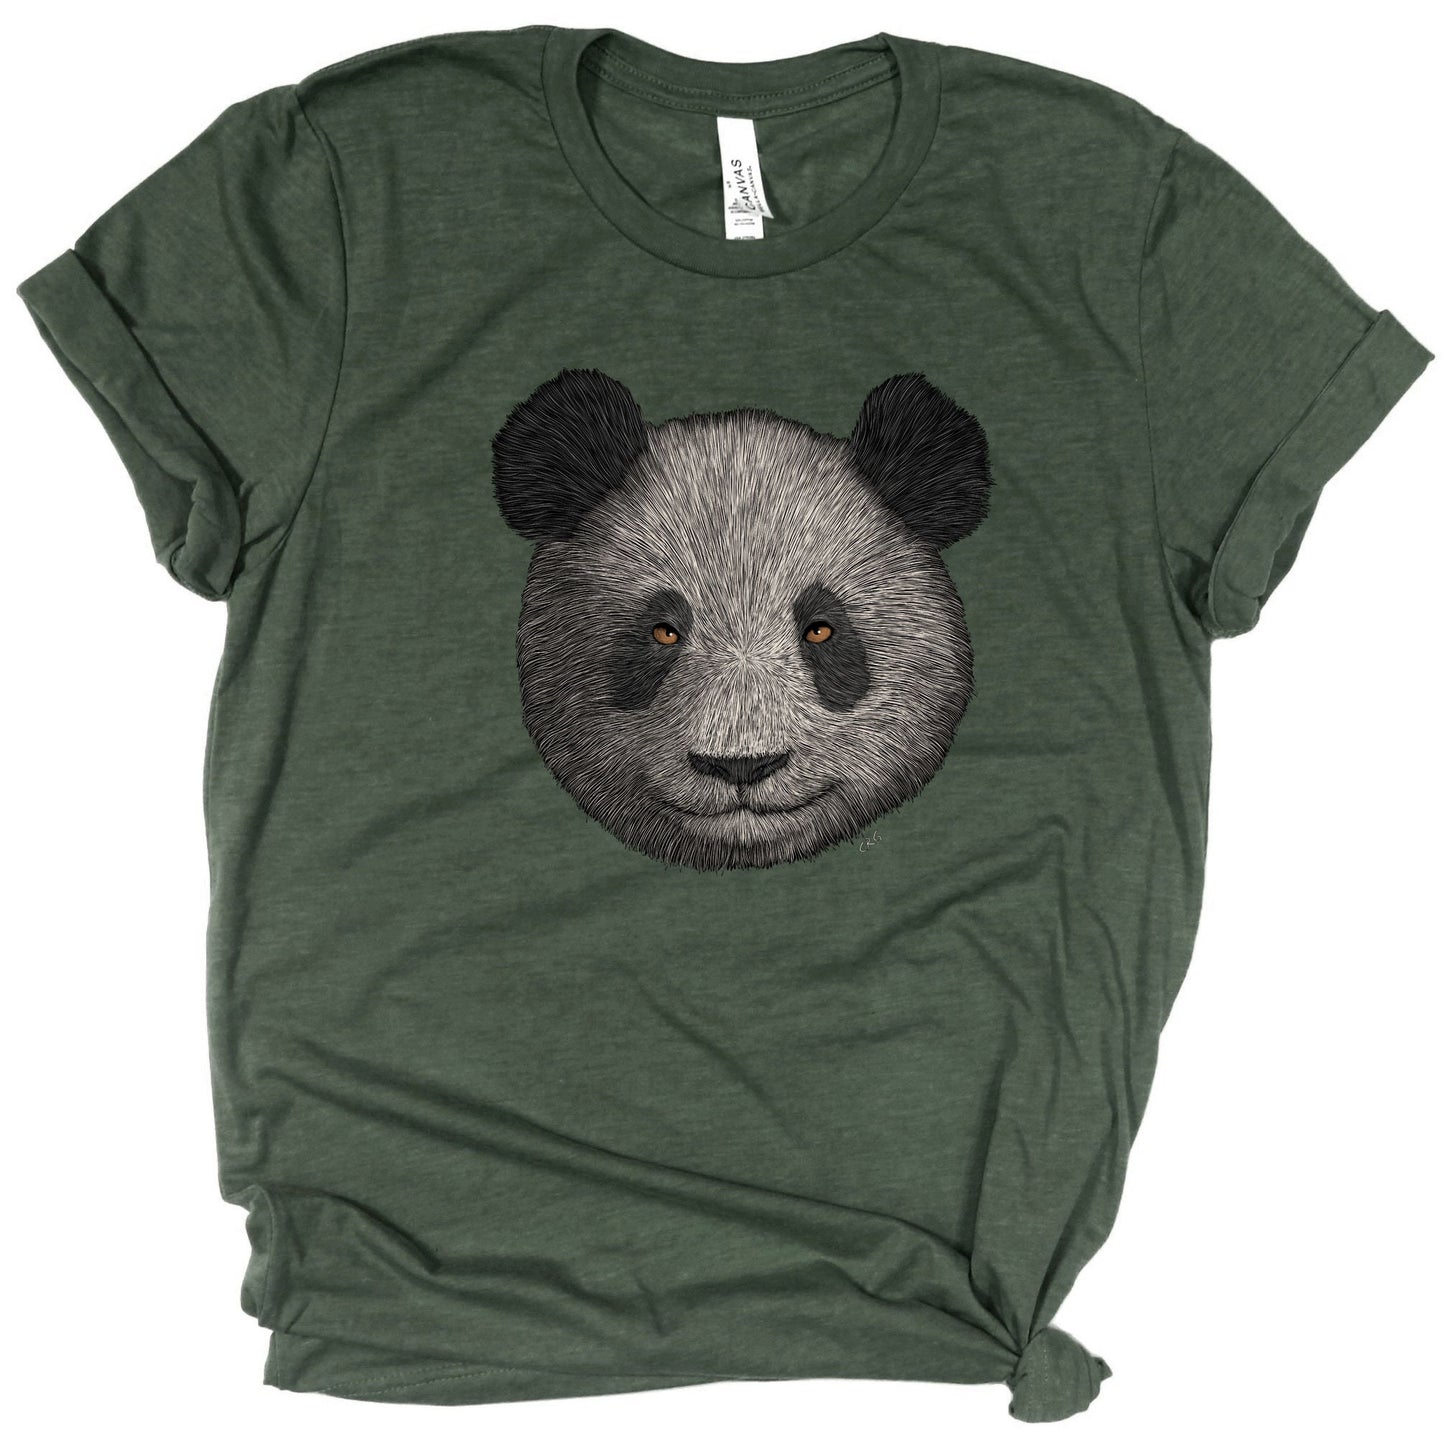 Panda Shirt / Panda / Panda Gifts / Cute Panda Shirt / Panda Lover / Panda Lover Gift / Pandas / Panda Tee / Panda T-Shirt / Asian Wildlife